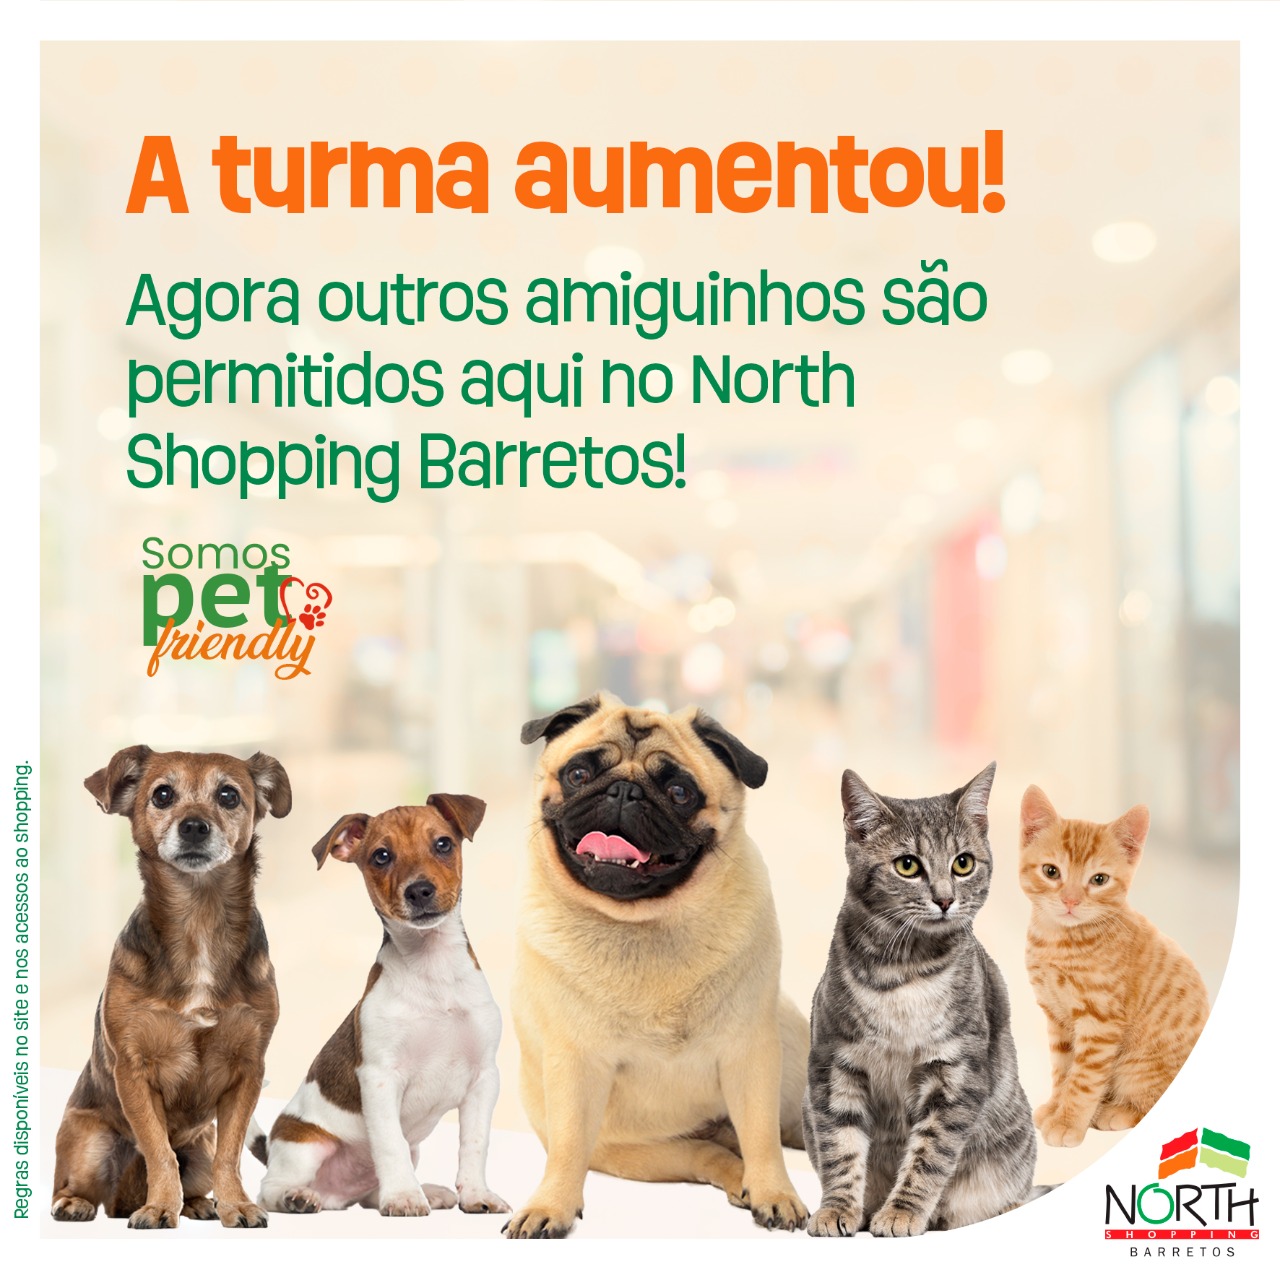 North Shopping Barretos amplia seu conceito “Pet Friendly”